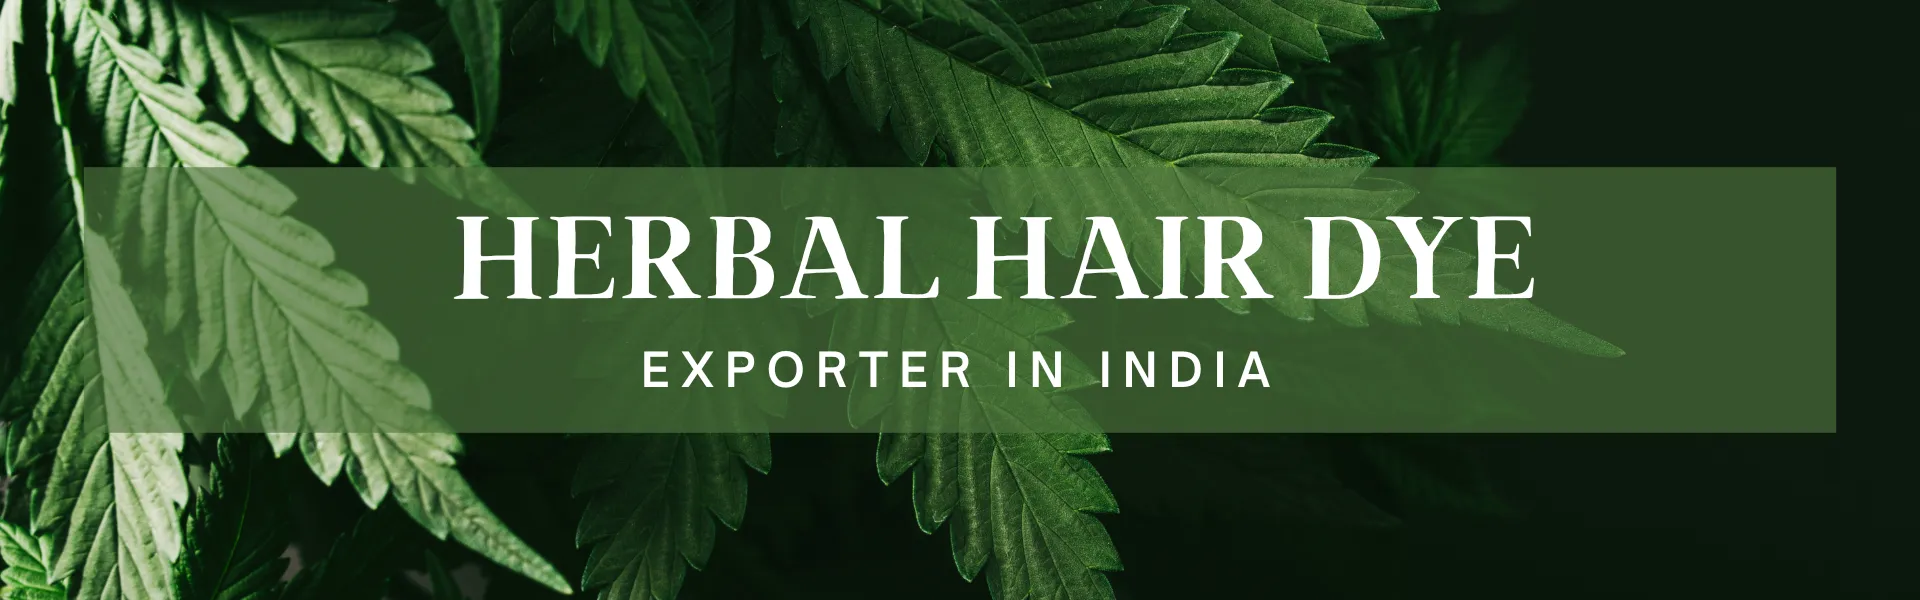 herbal hair dye exporter in India - www.dkihenna.com